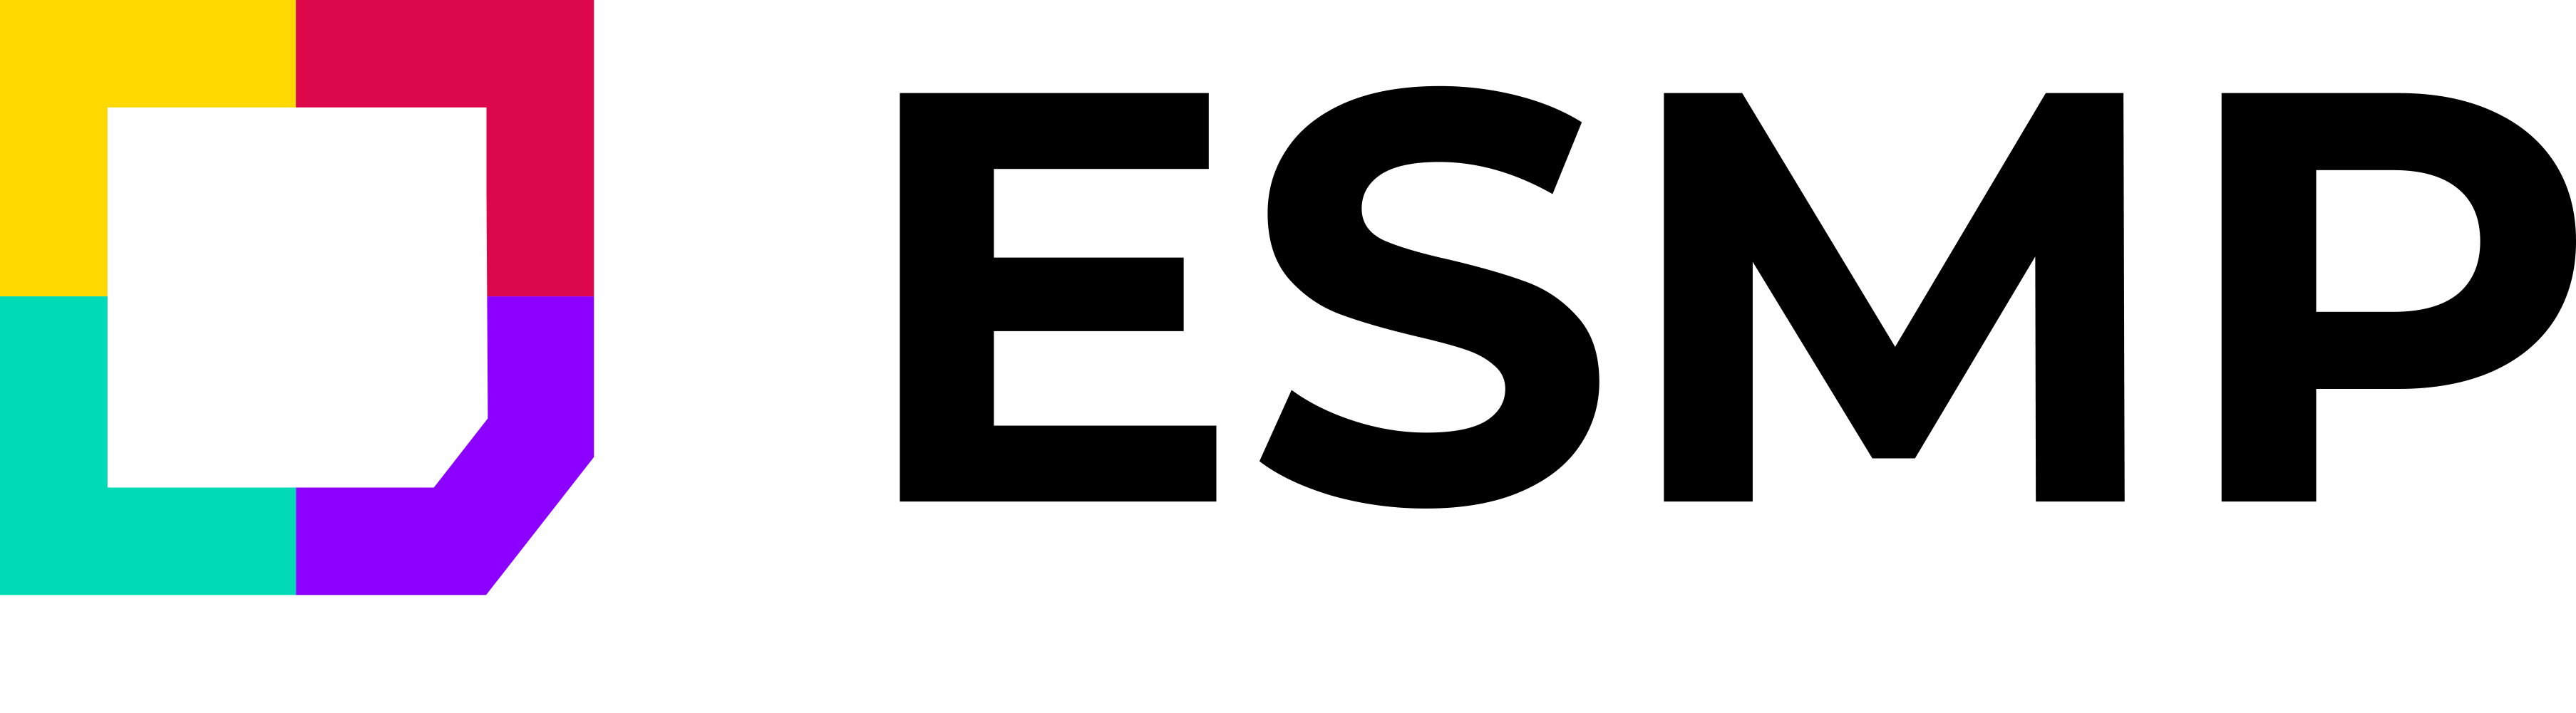 ESMP_logo.png